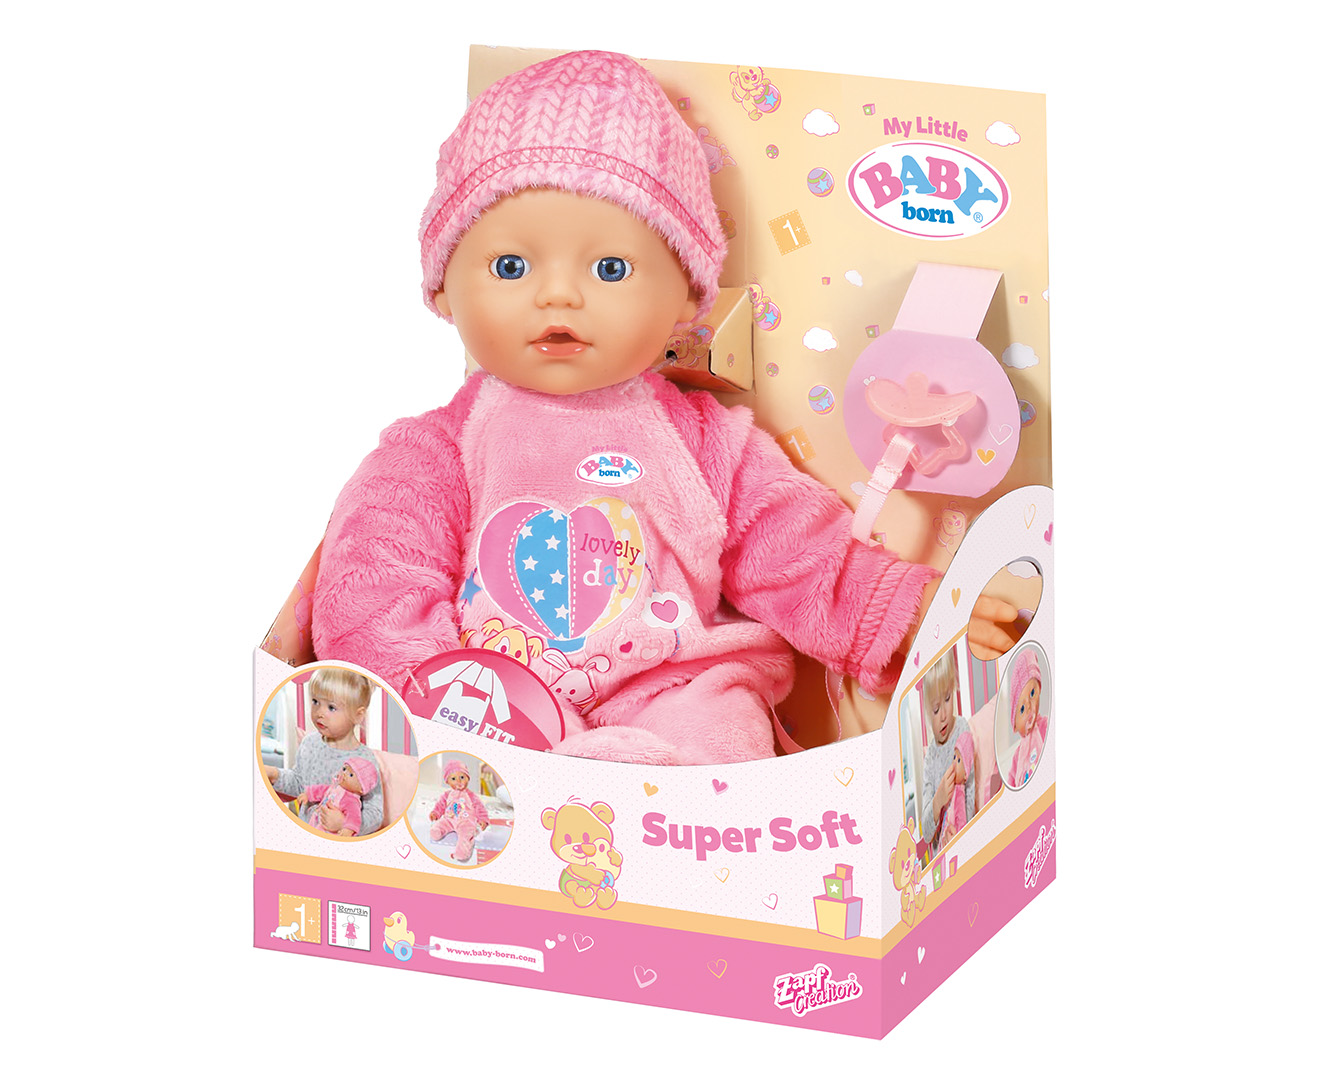 super soft baby born